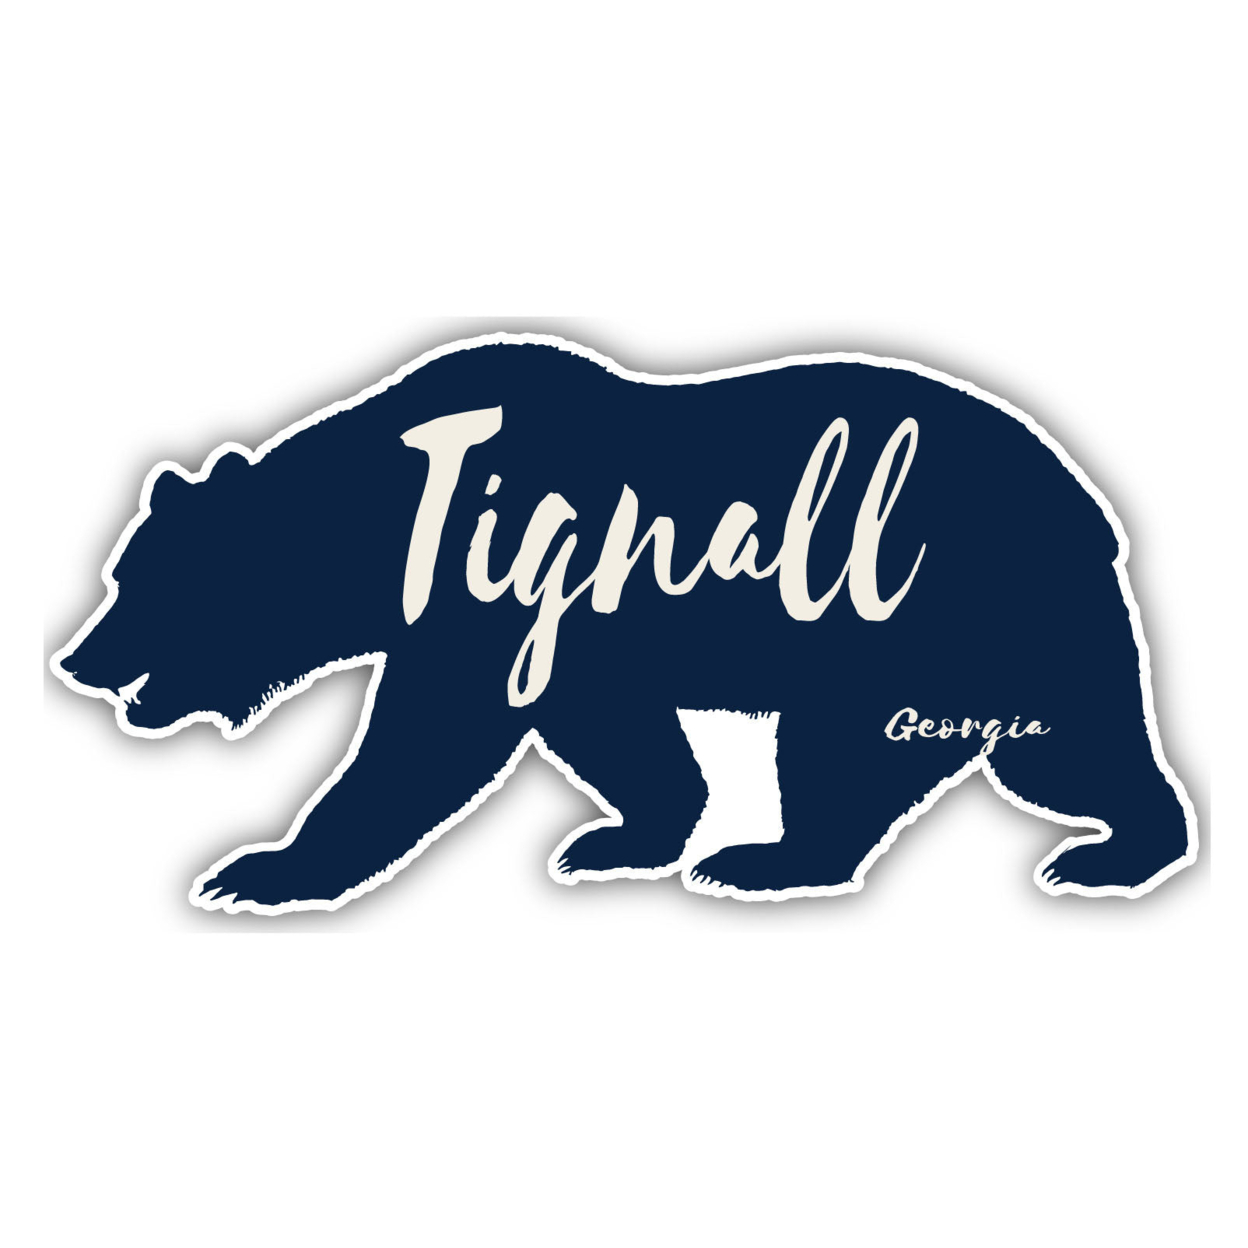 Tignall Georgia Souvenir Decorative Stickers (Choose Theme And Size) - Single Unit, 2-Inch, Bear